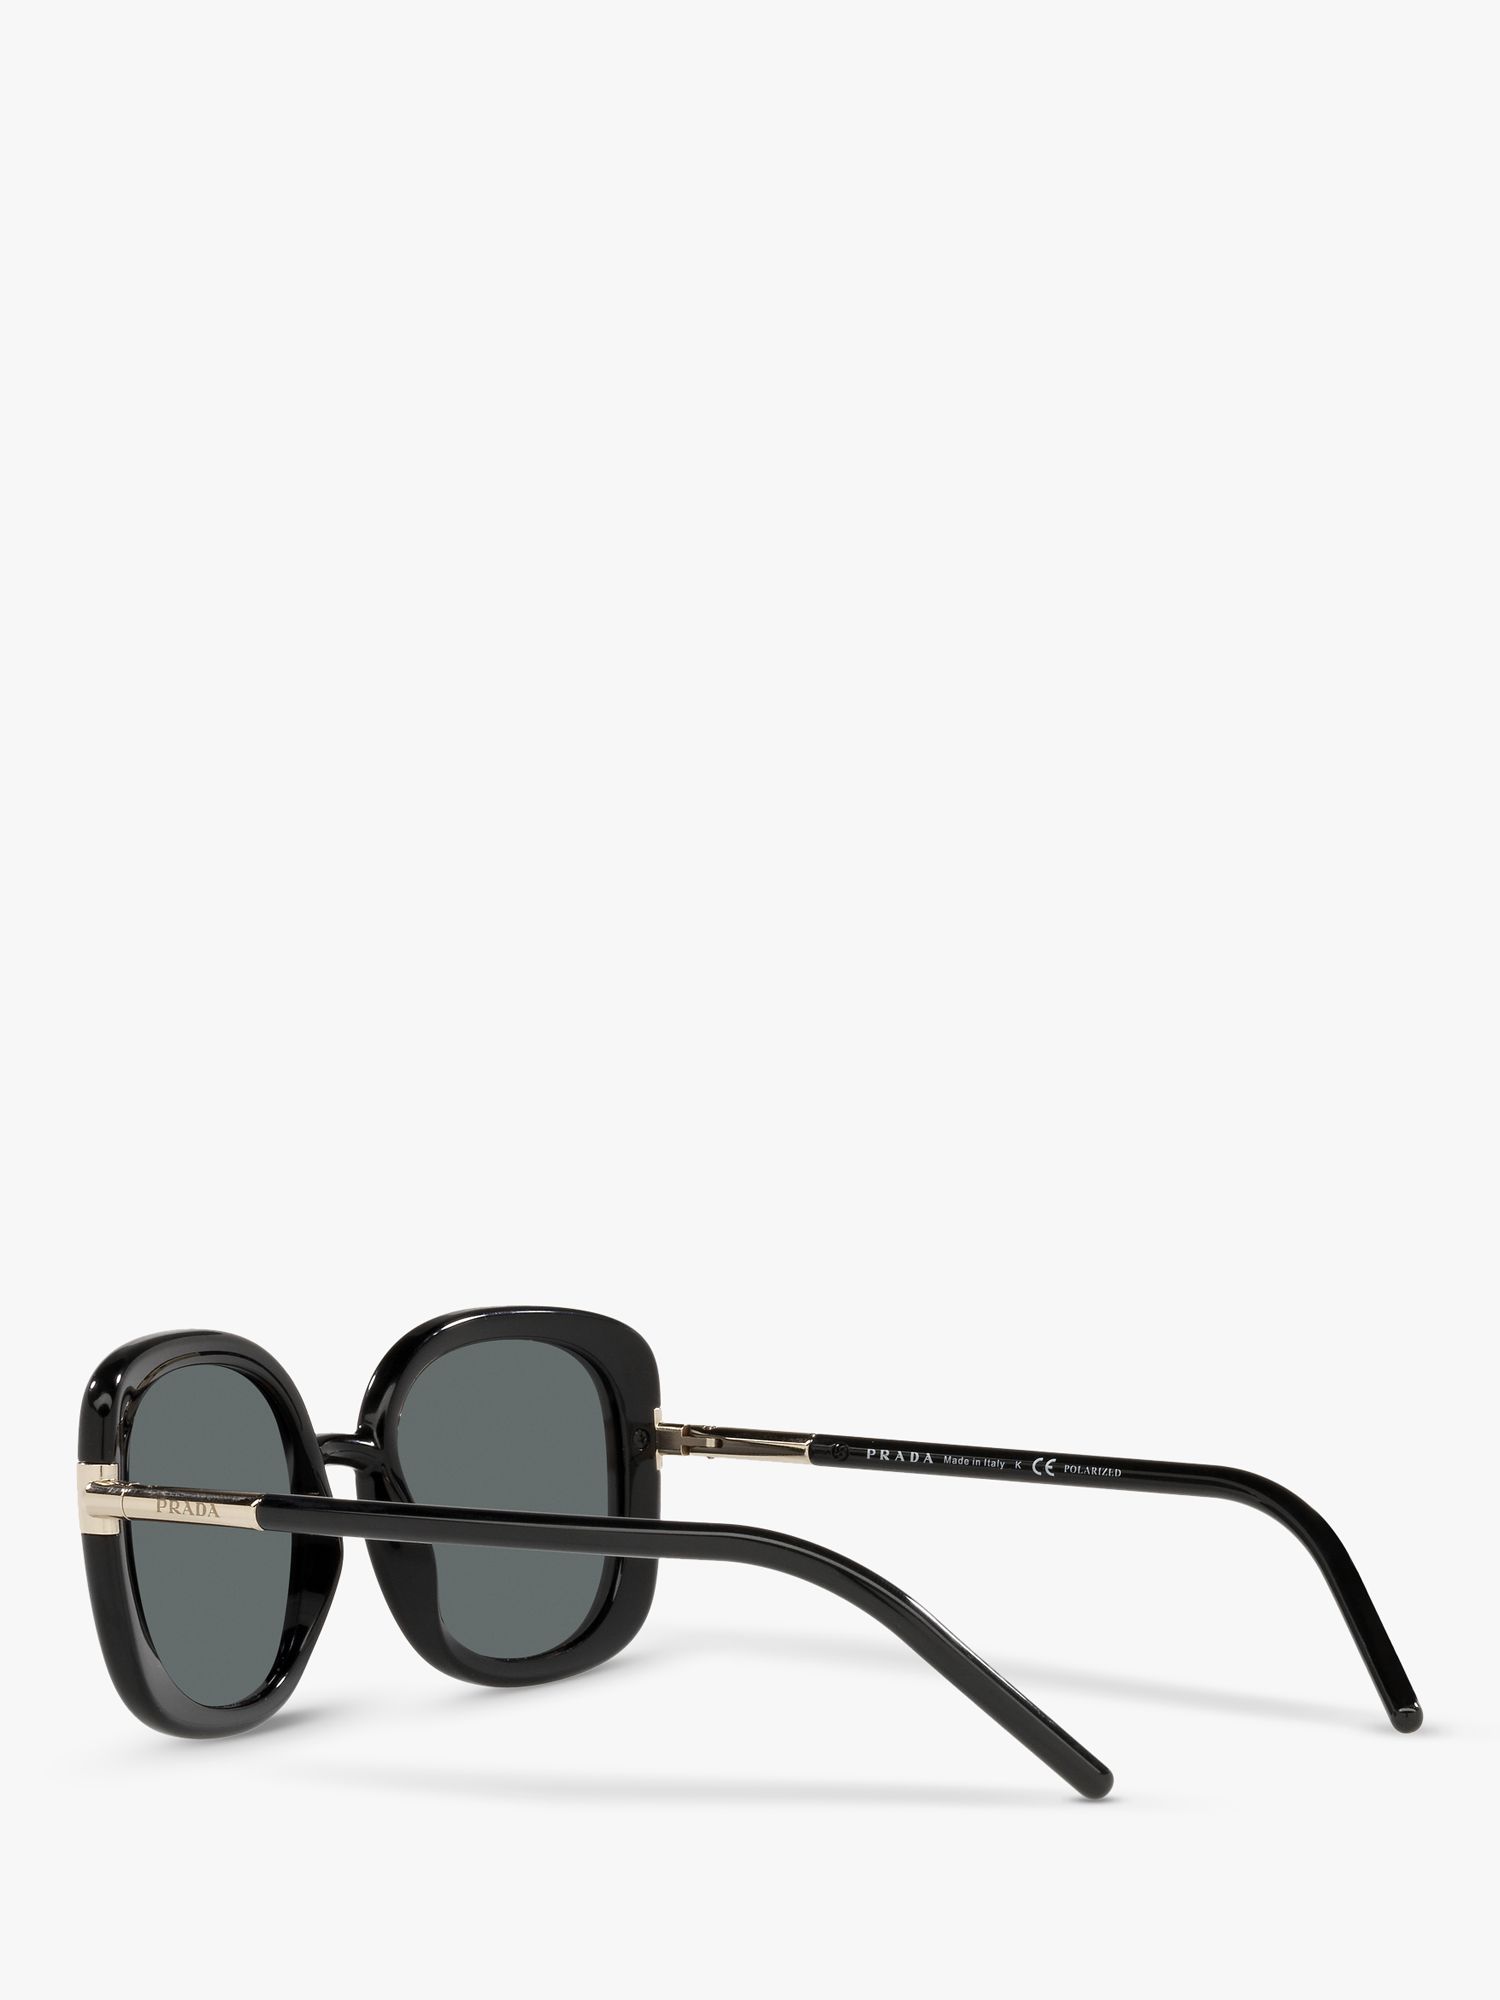 Prada PR 04WS Women's Polarised Oversized Round Sunglasses, Black at John Lewis & Partners